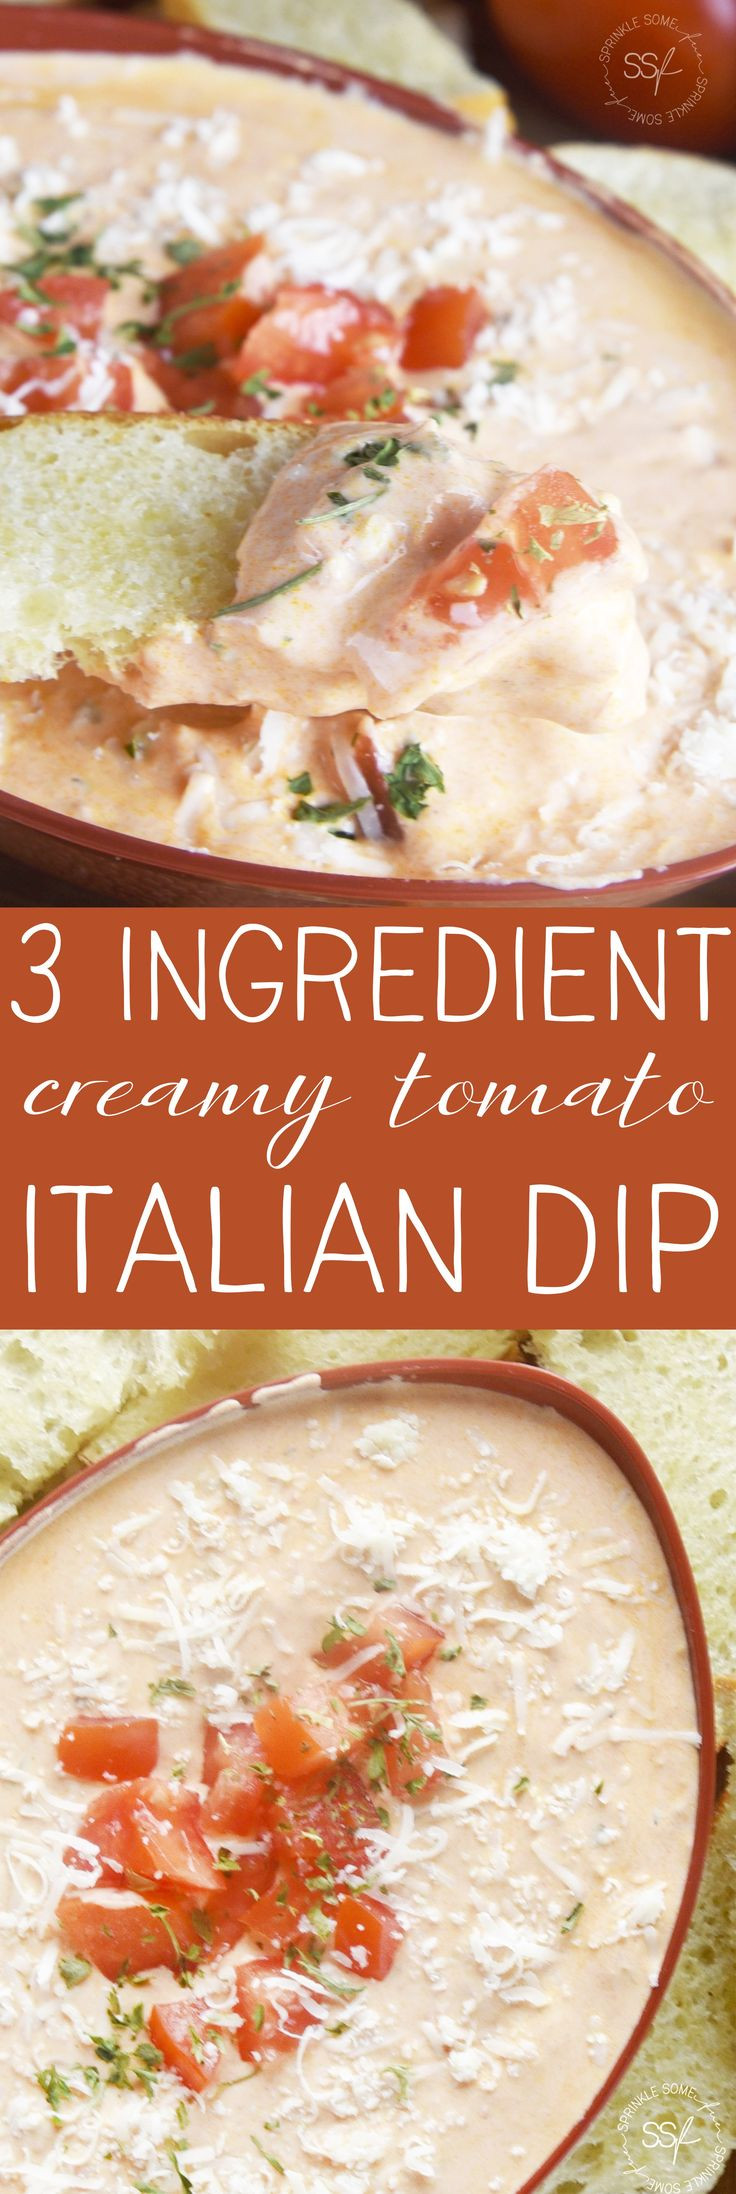 Italian Dips Appetizers
 3 Ingre nt Creamy Tomato Italian Dip Recipe